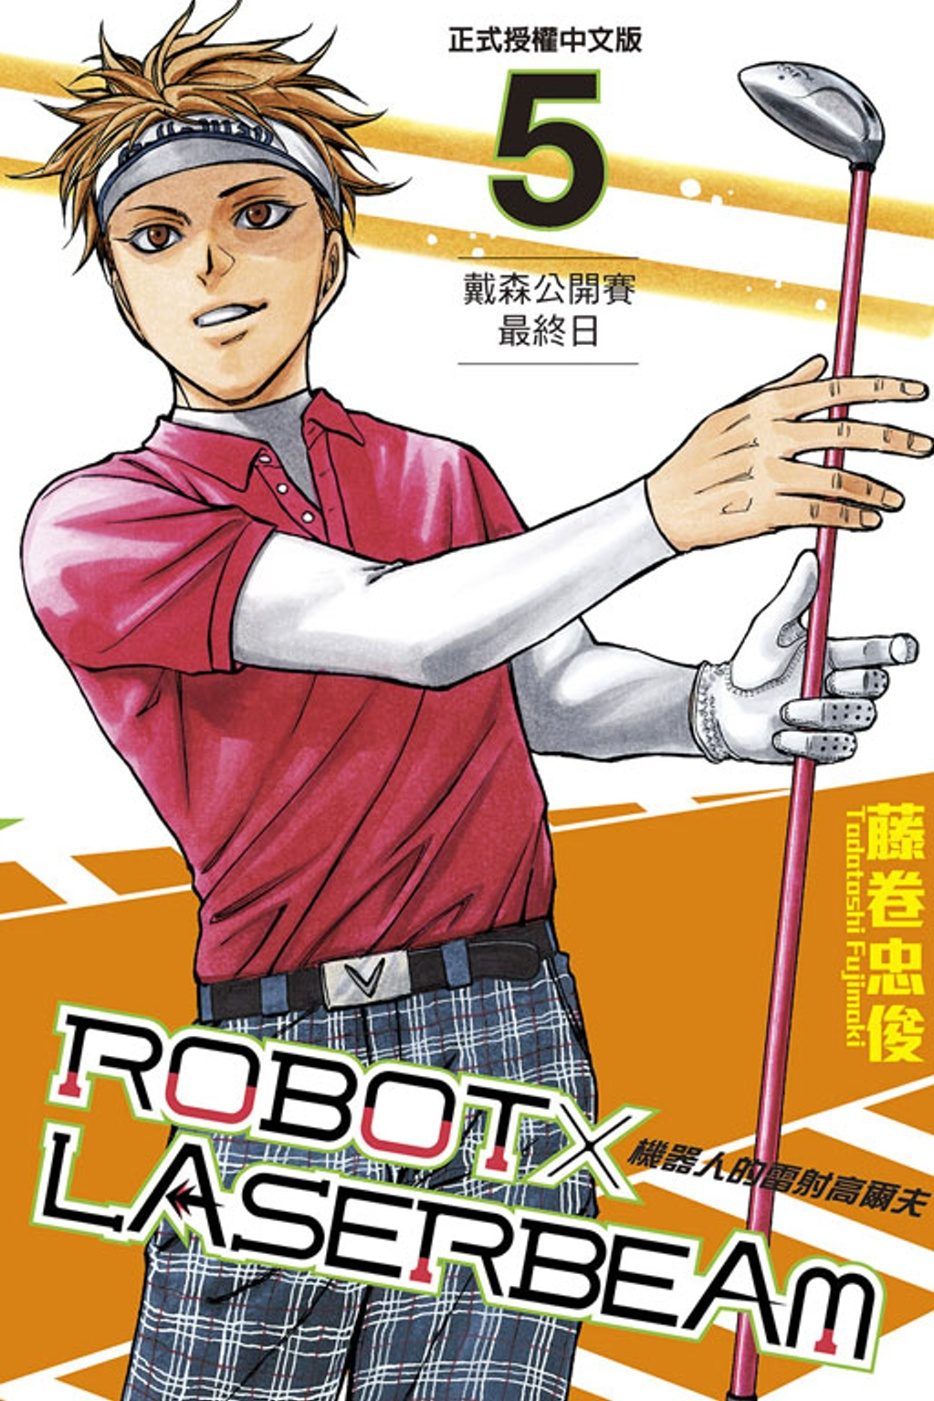 ROBOT×LASERBEAM機器人的雷射高爾夫